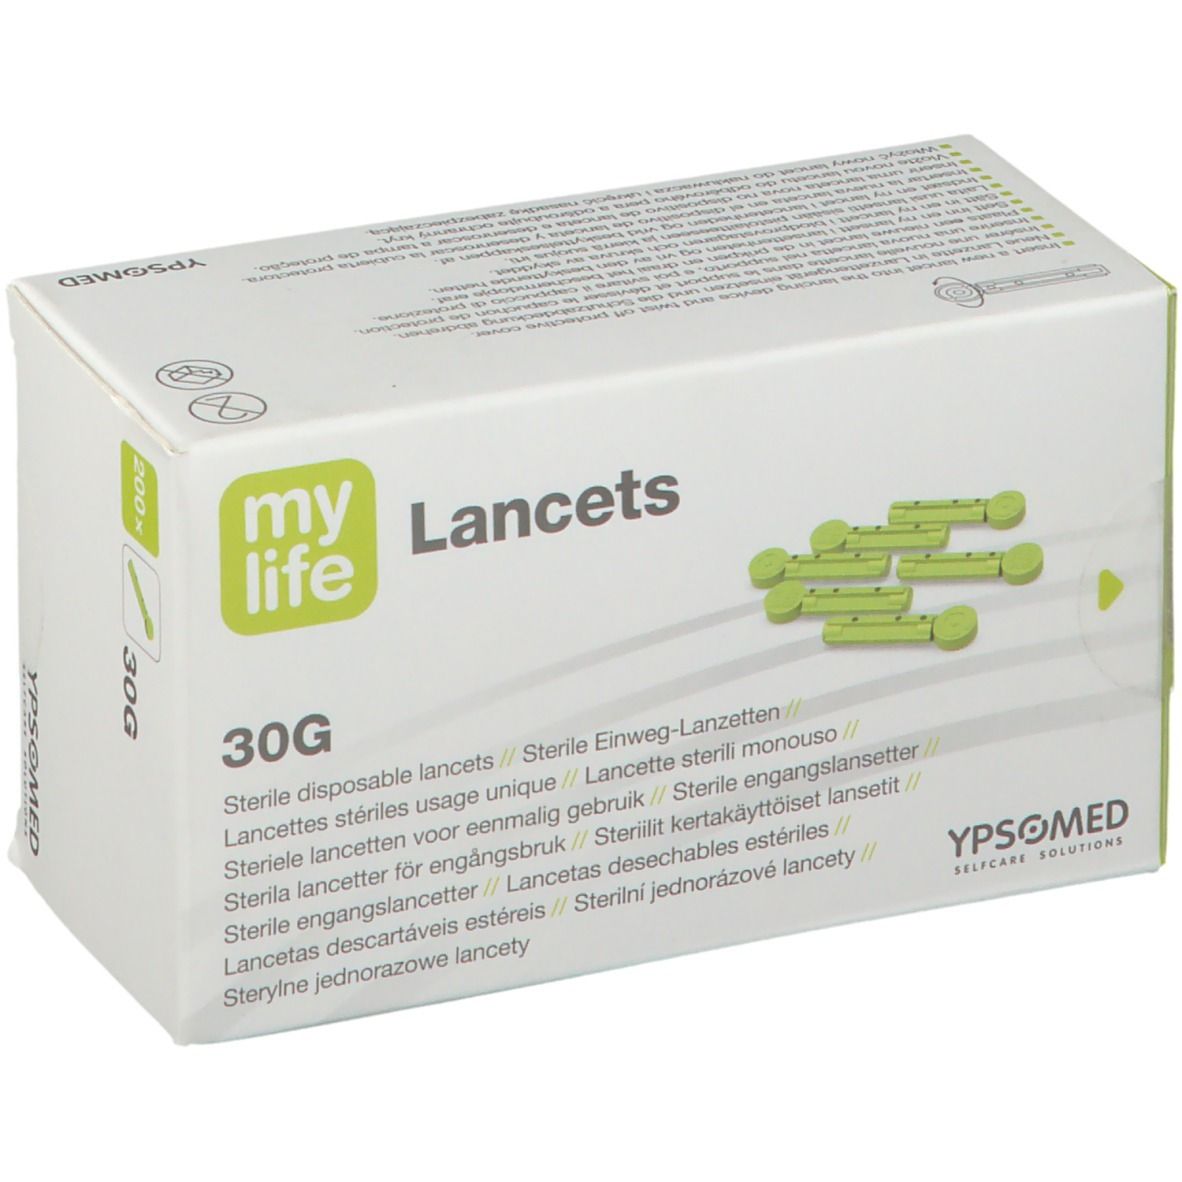 mylife Lancets